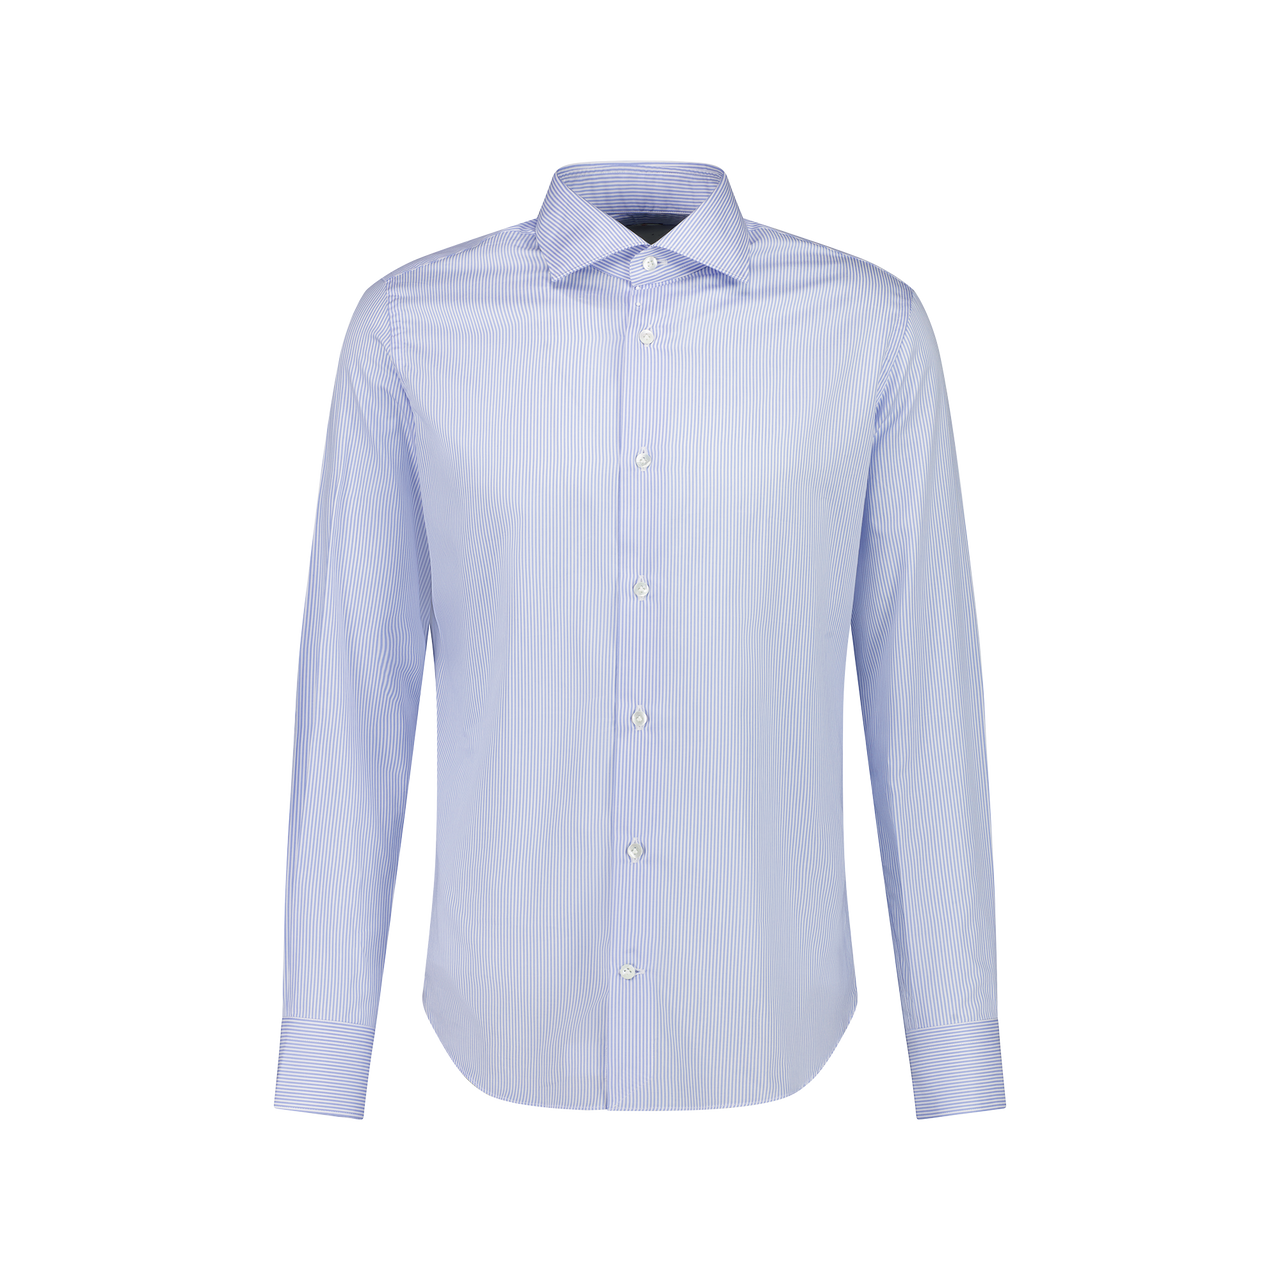 Cordone Elegance 313 Shirt in LIGHT BLUE